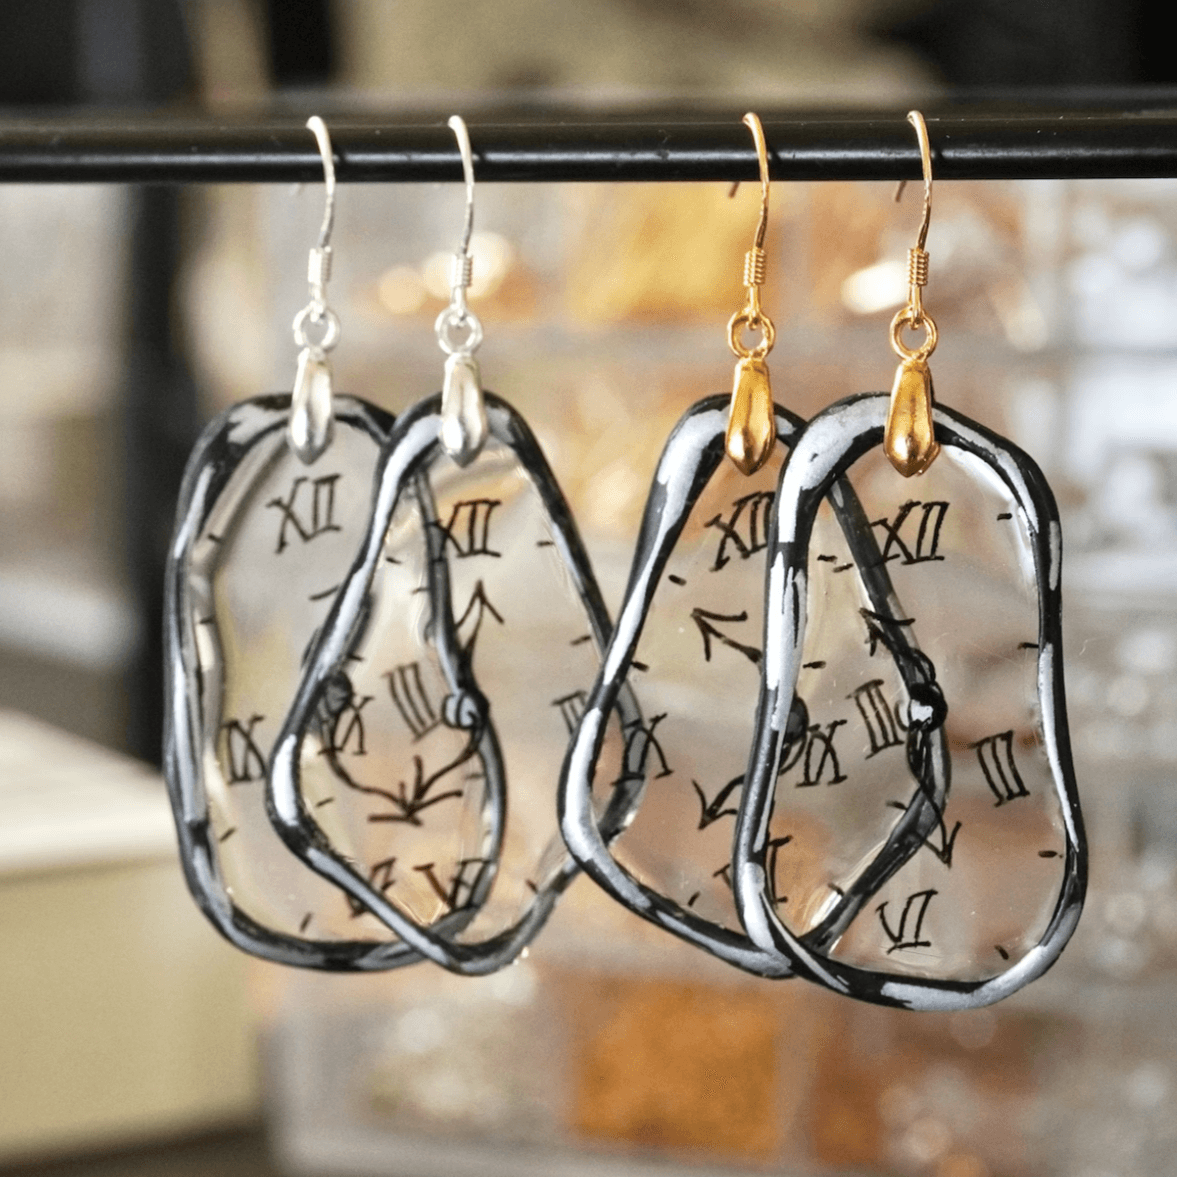 Handmade Clock Earrings - zuzumia